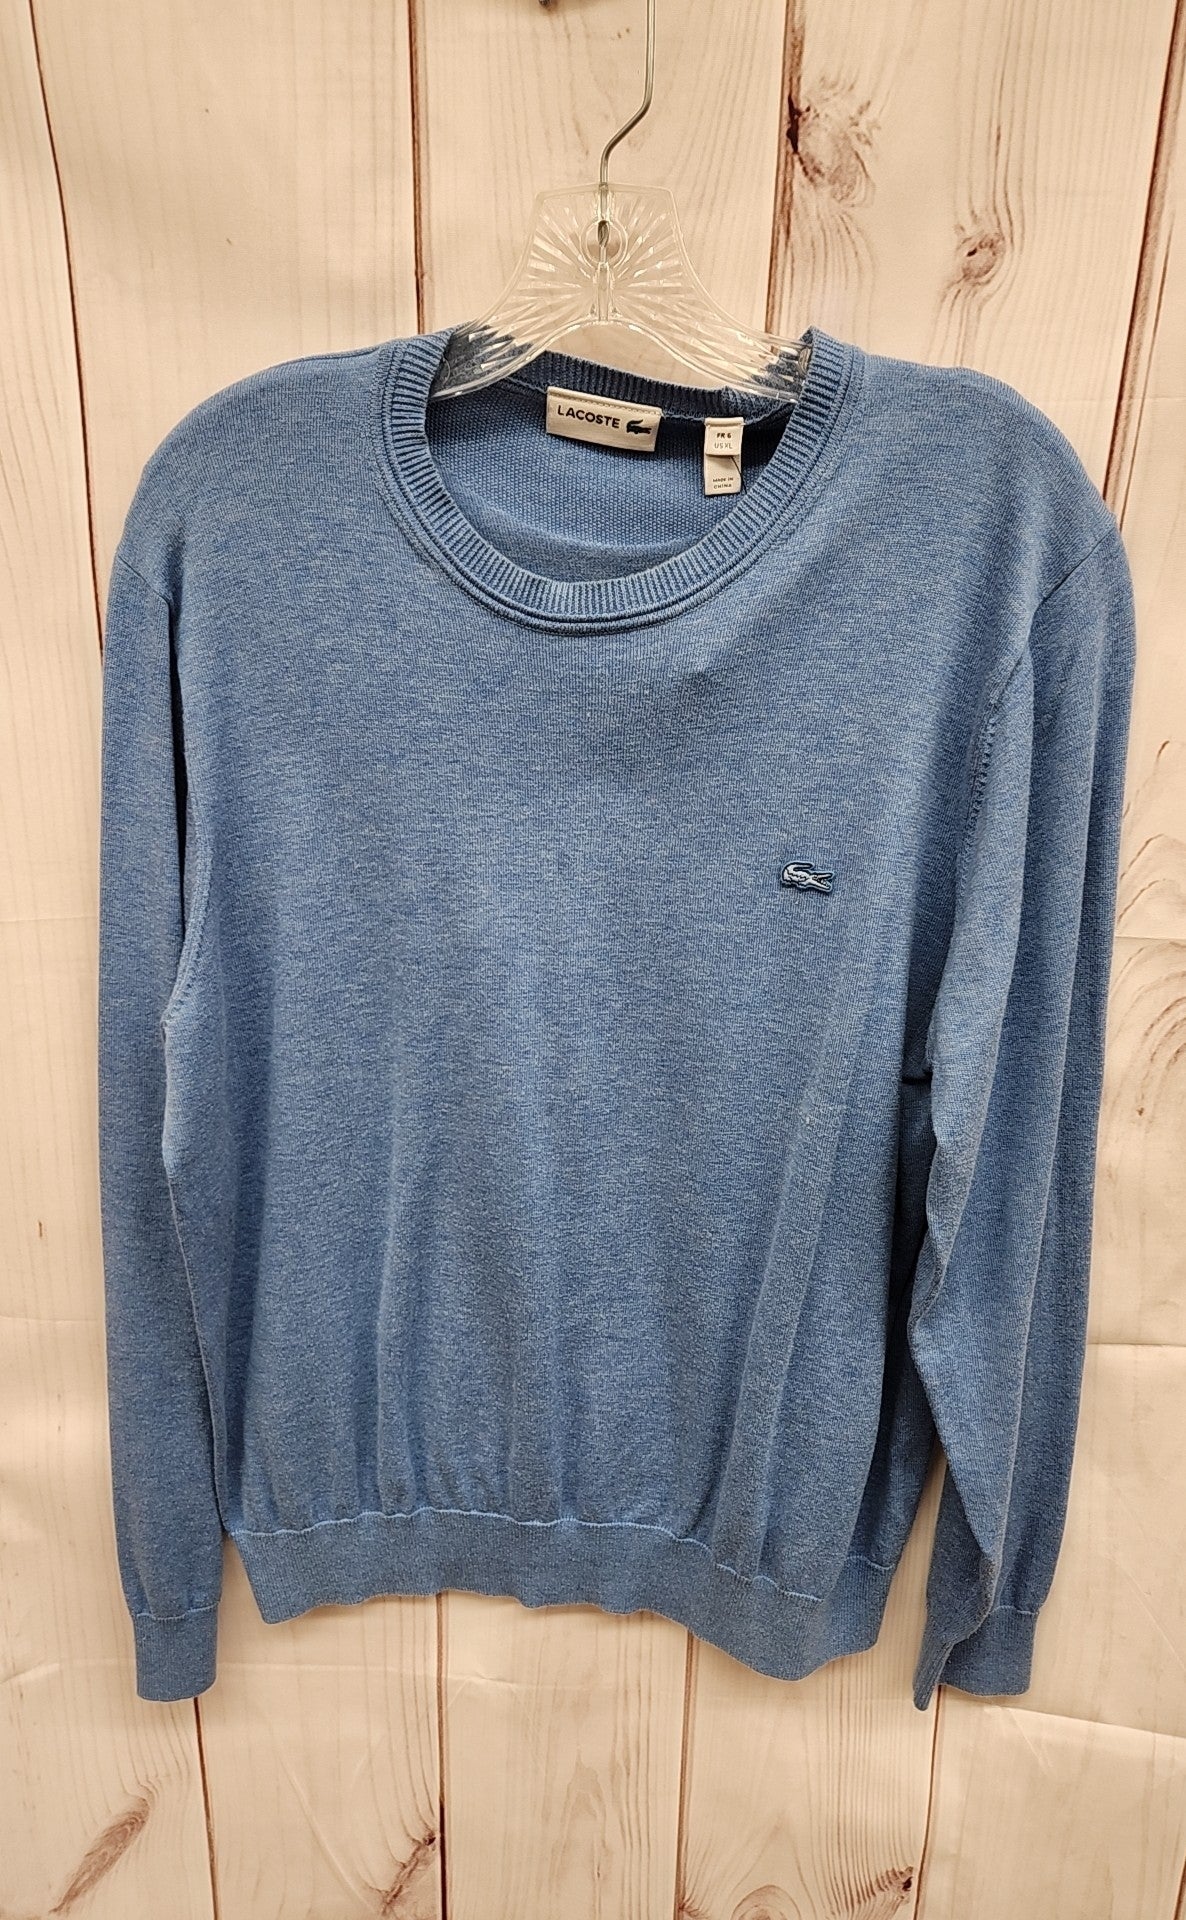 Lacoste Men's Size XL Blue Sweater